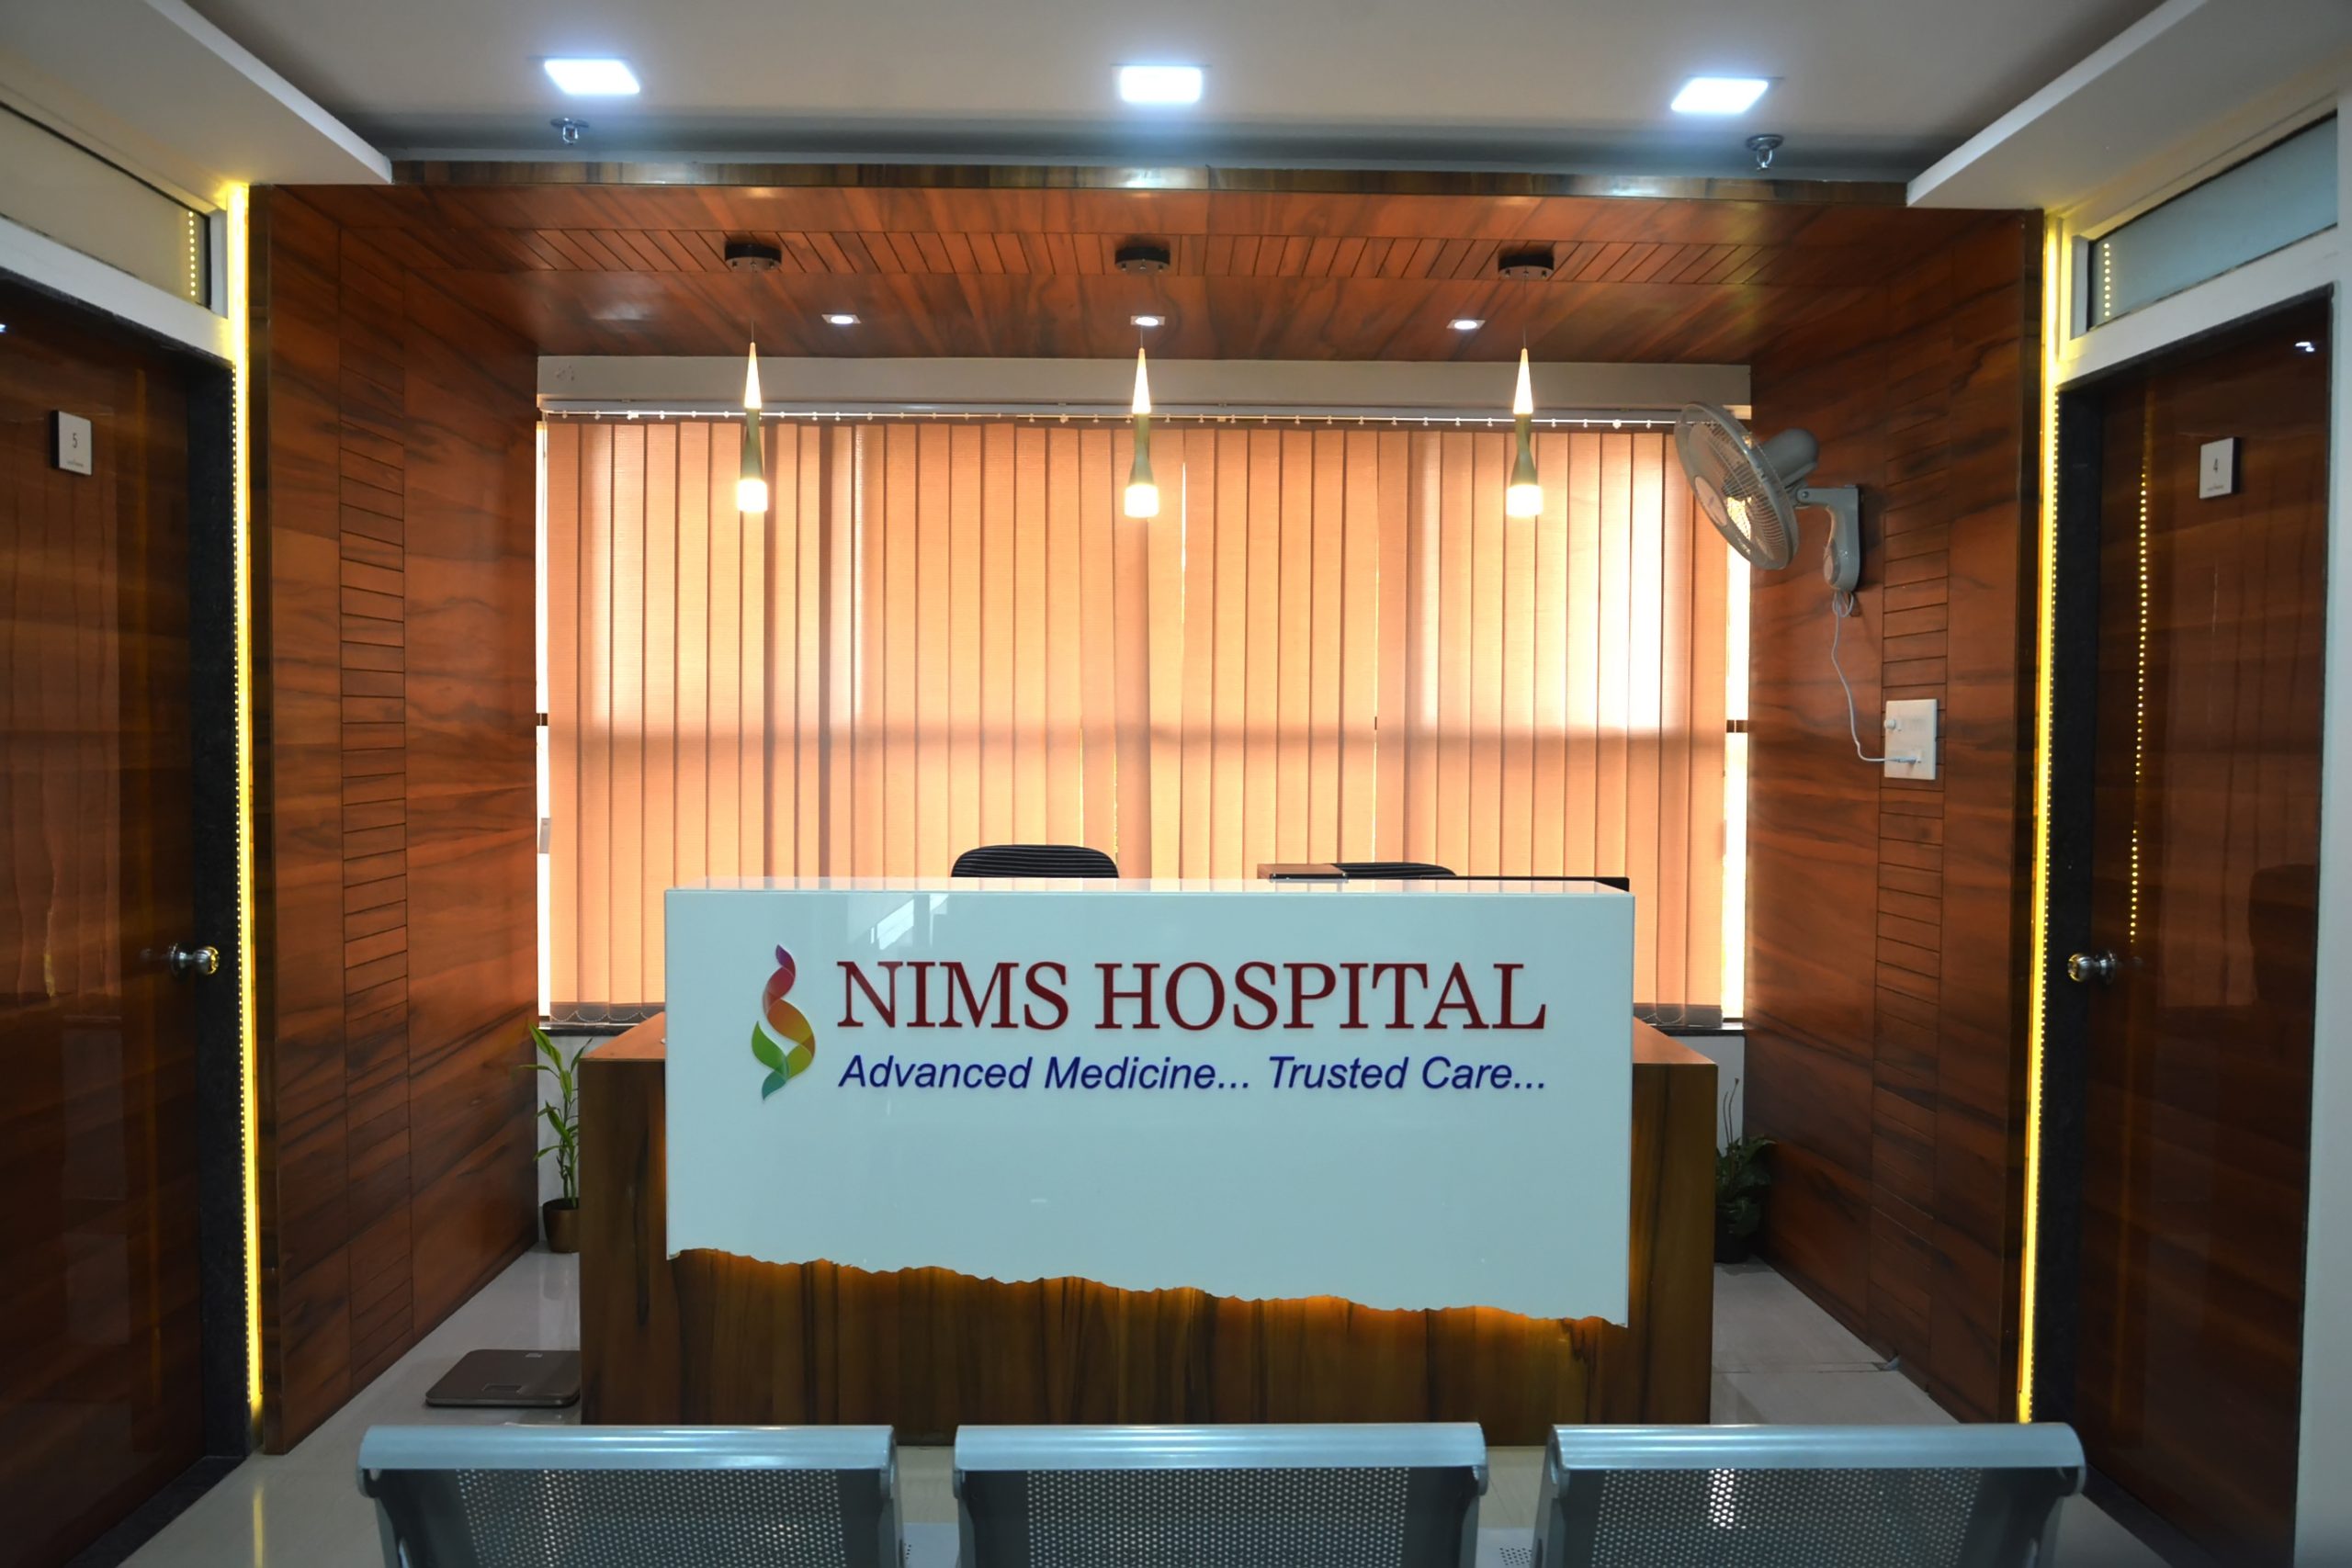 Nims hospital